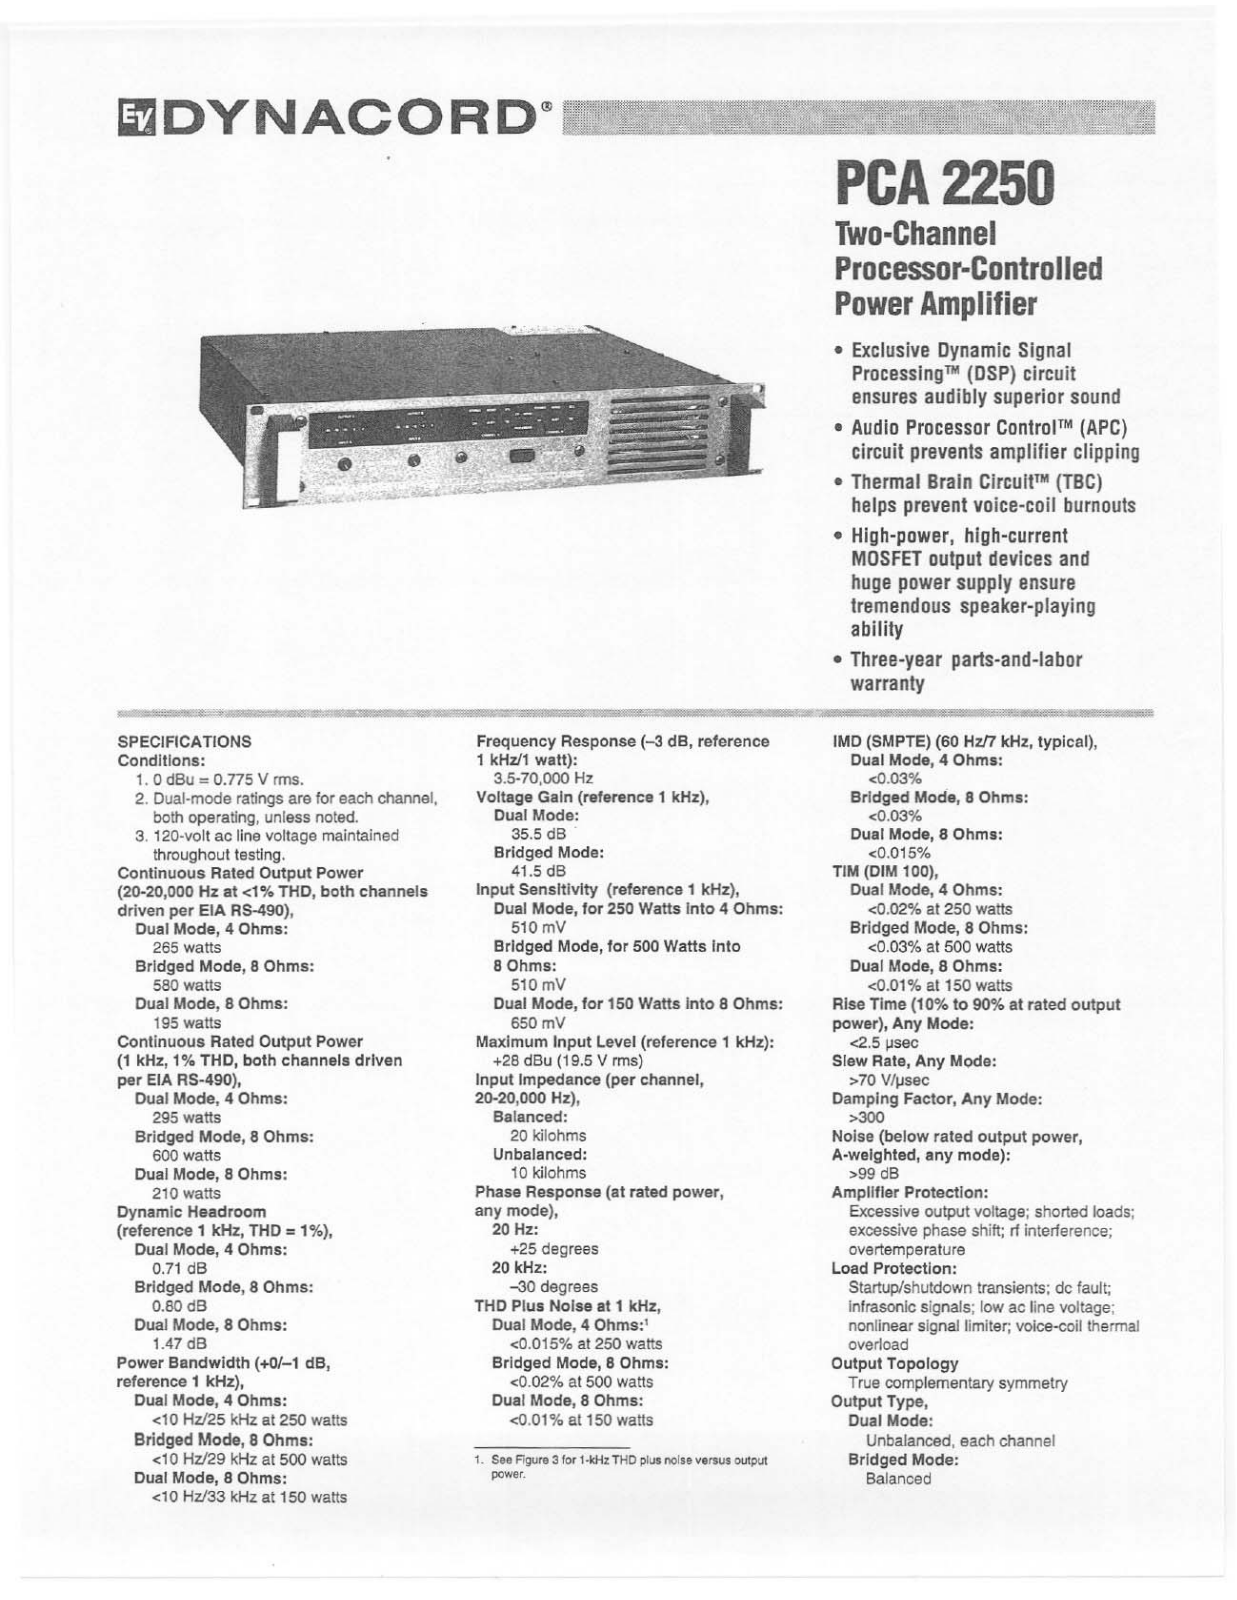 Dynacord PCA-2250 Brochure